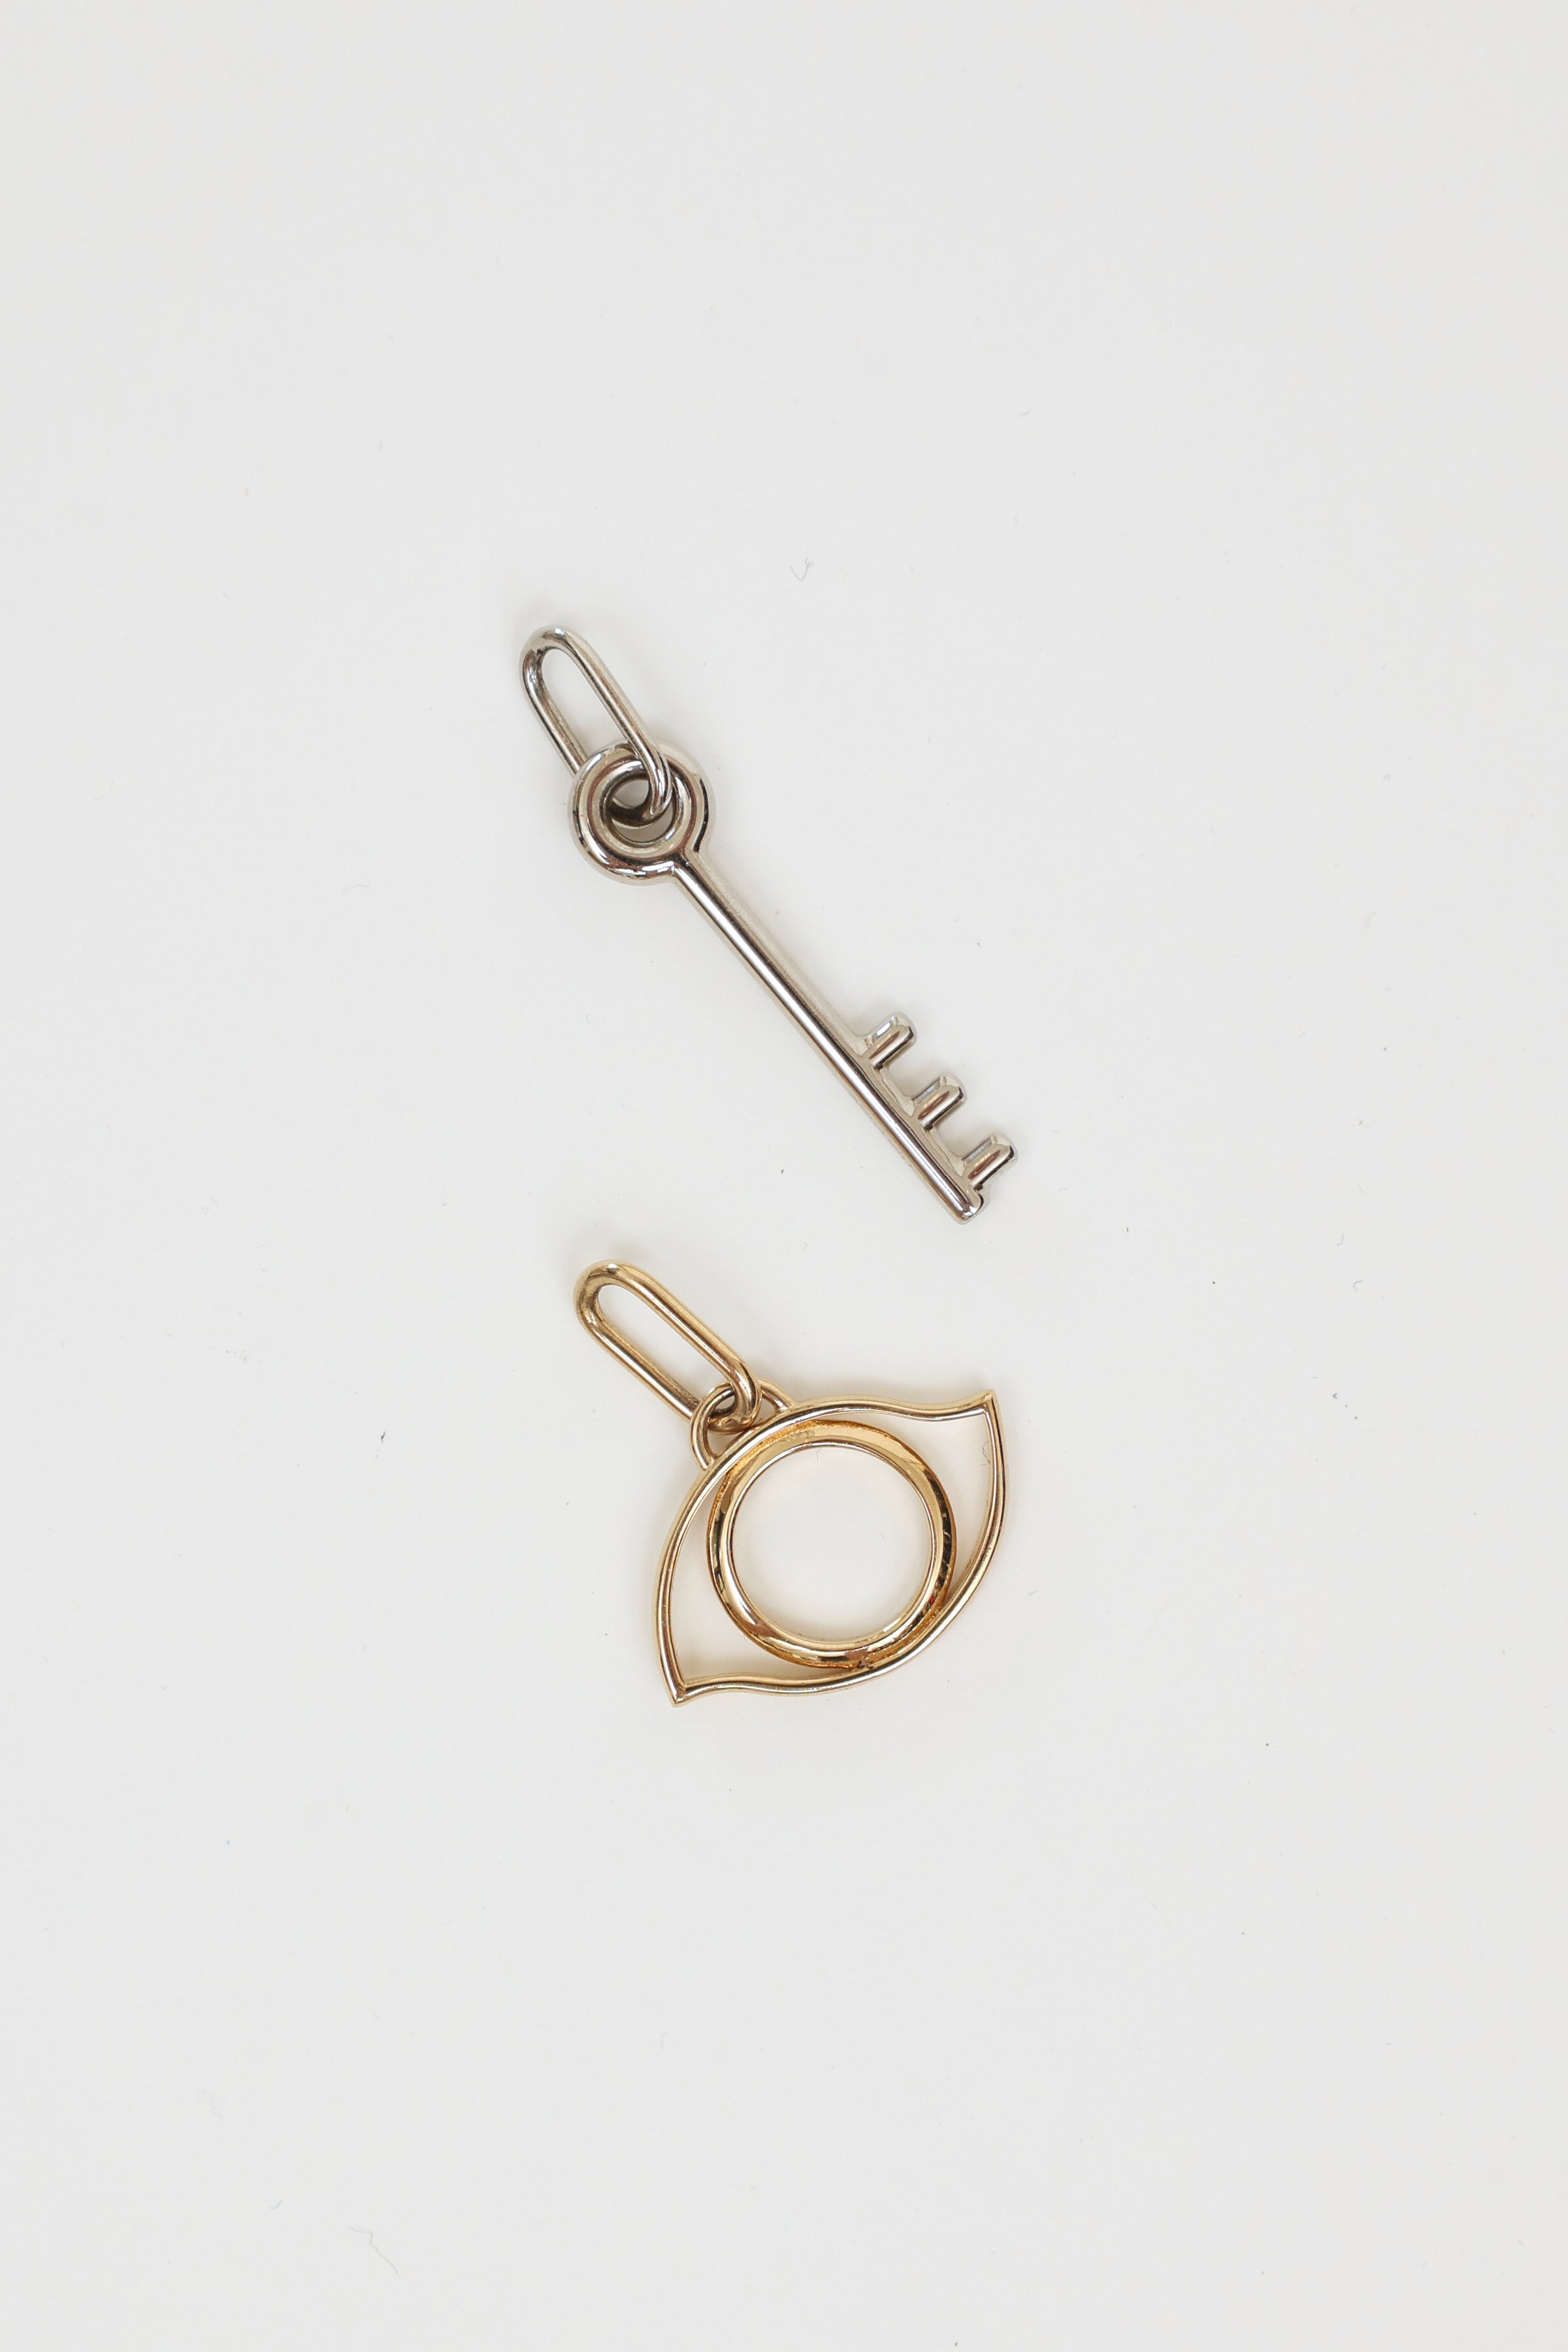 Hermes Gold Veau Swift Leather/Palladium Curiosite Necklace Pendant